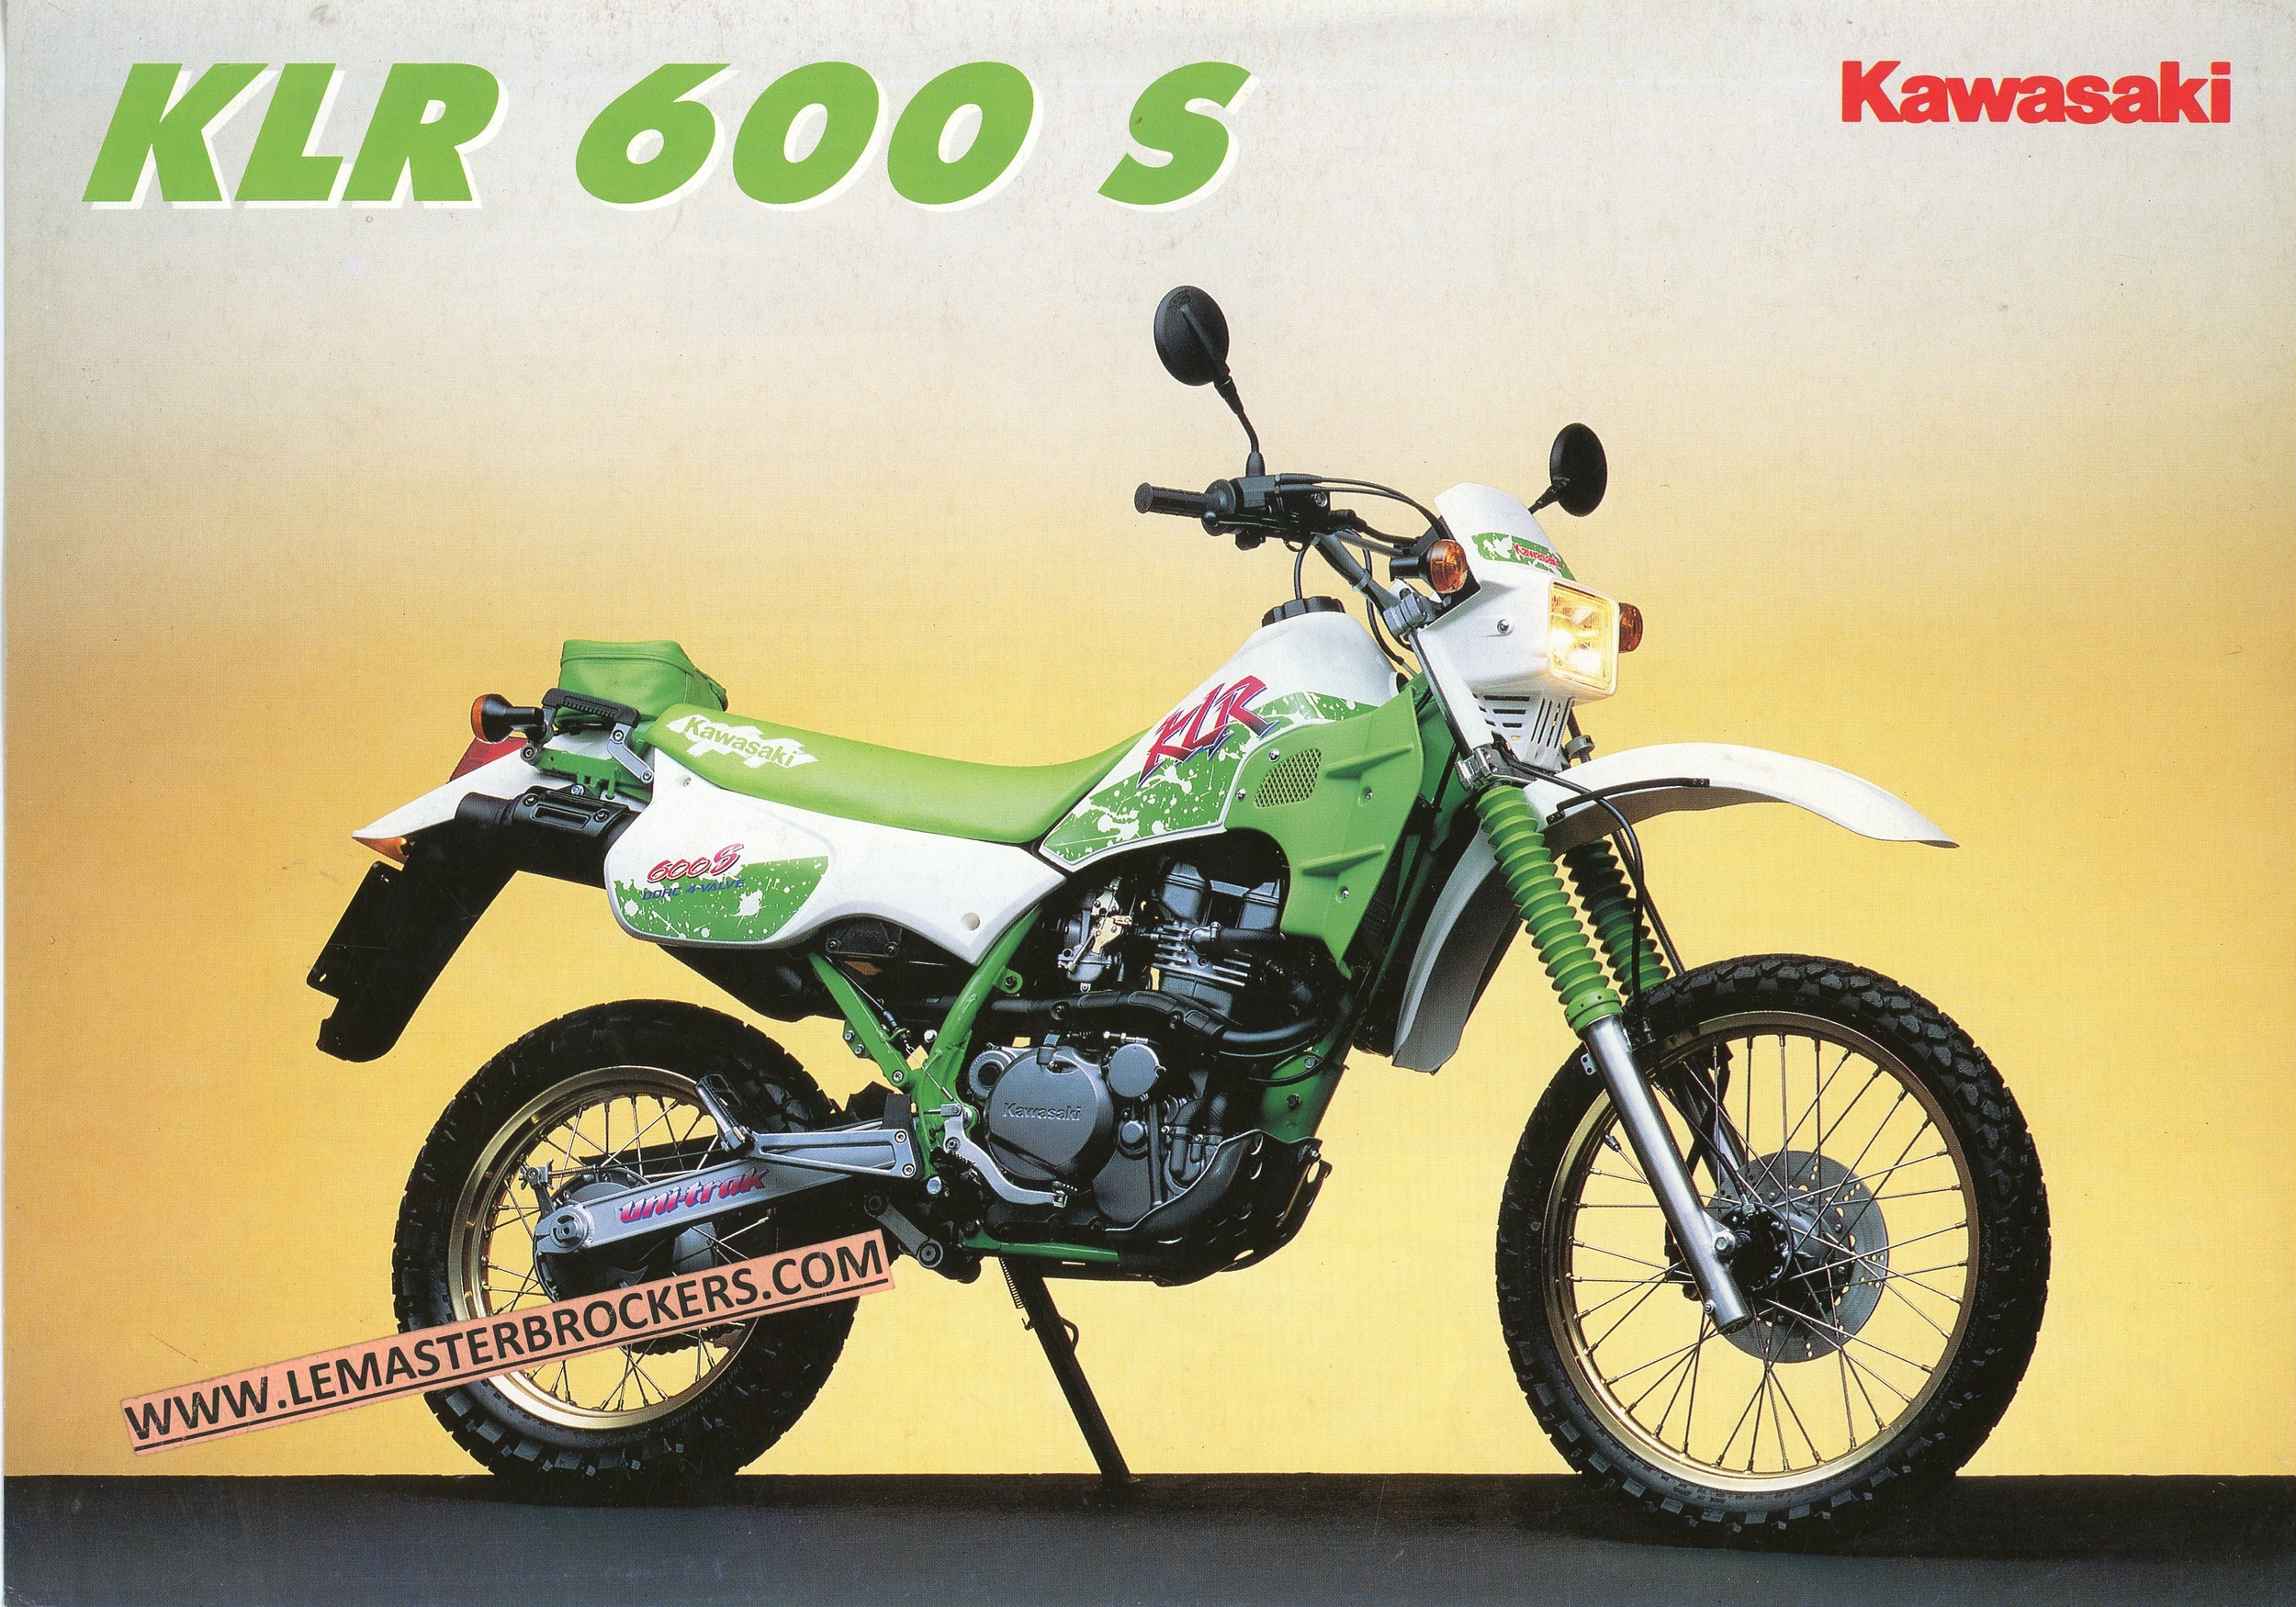 brochure-moto-KAWASAKI-KLR-600-KLR600S-lemasterbrockers